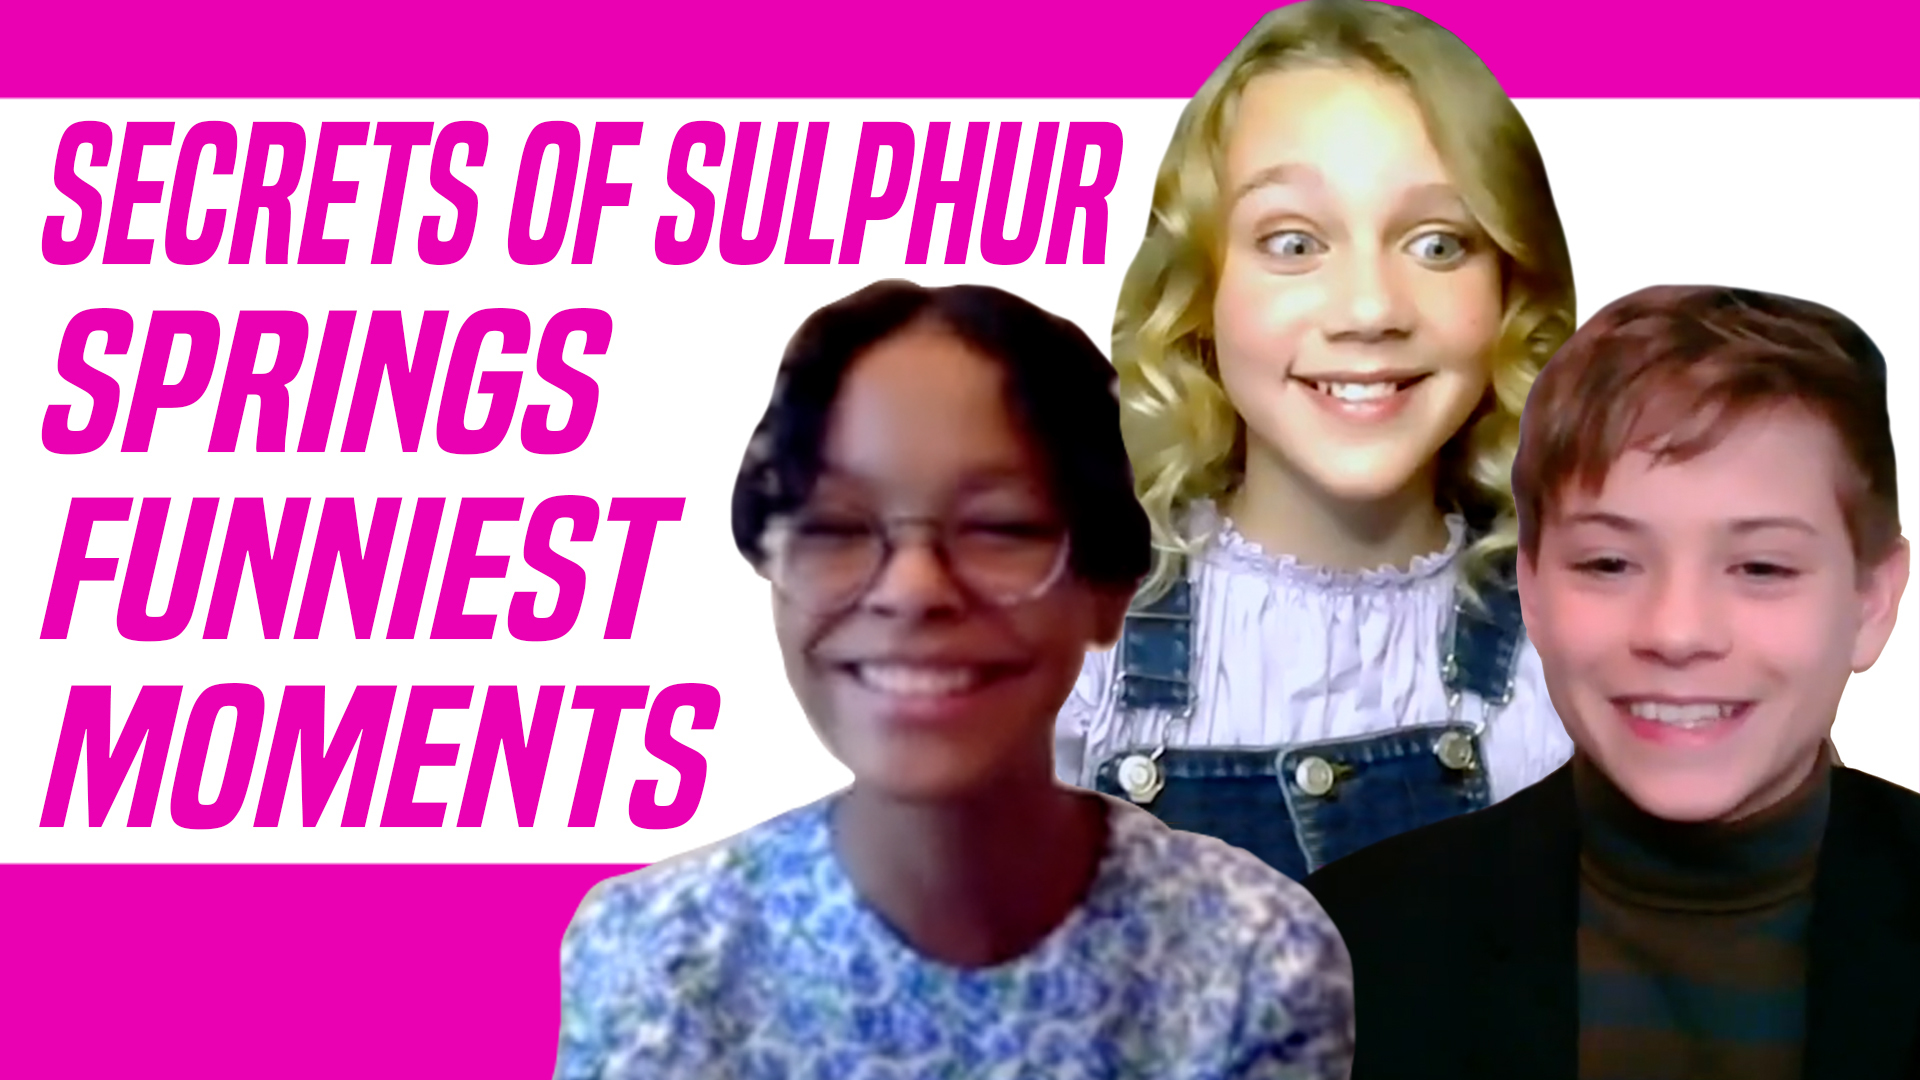 secrets of sulphur springs season 2 episode 1 disney plus